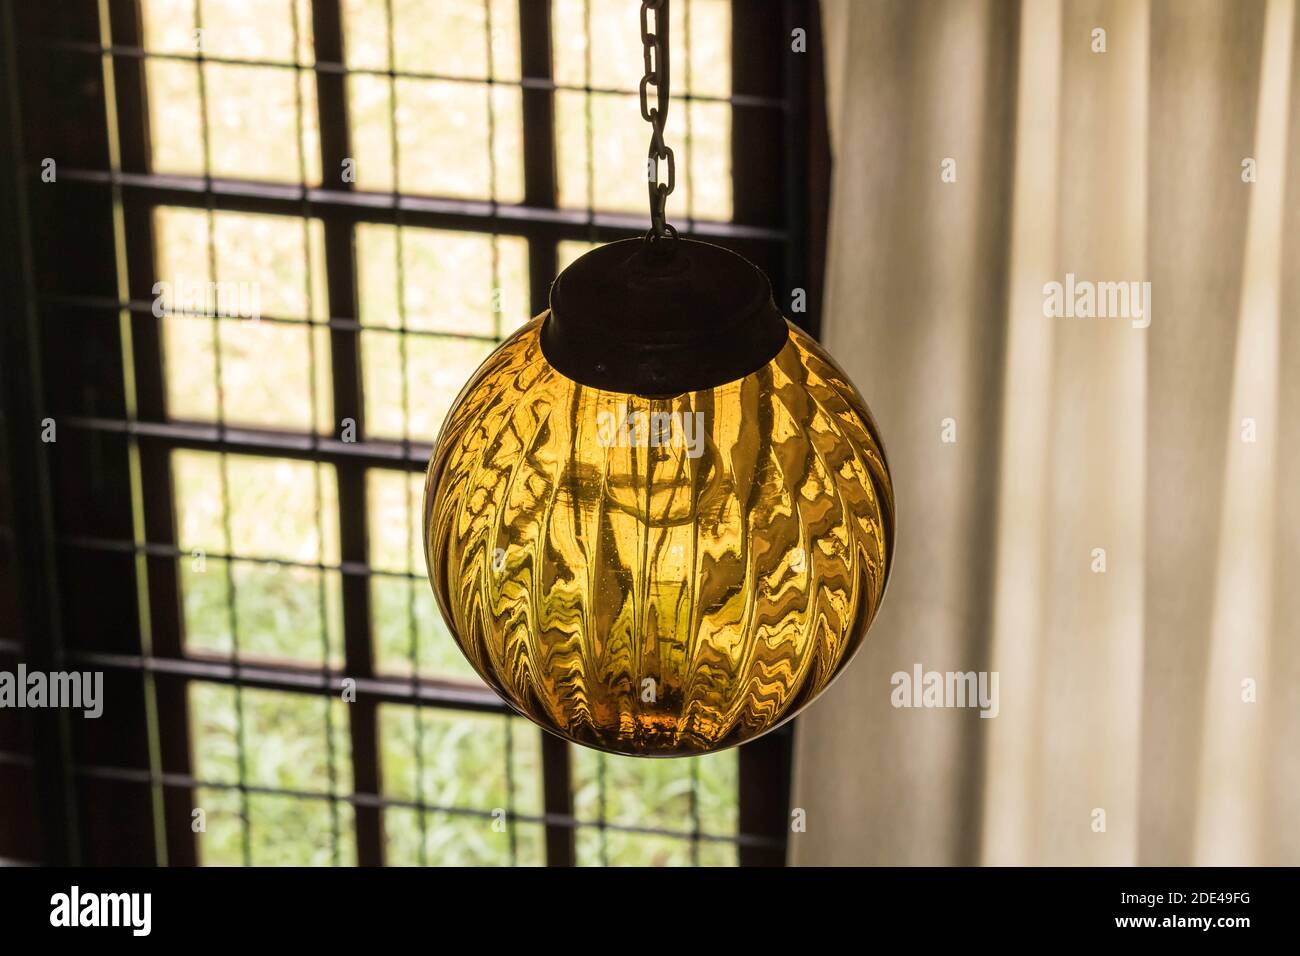 Pantalla de lámpara de globo fotografías e imágenes de alta resolución -  Alamy